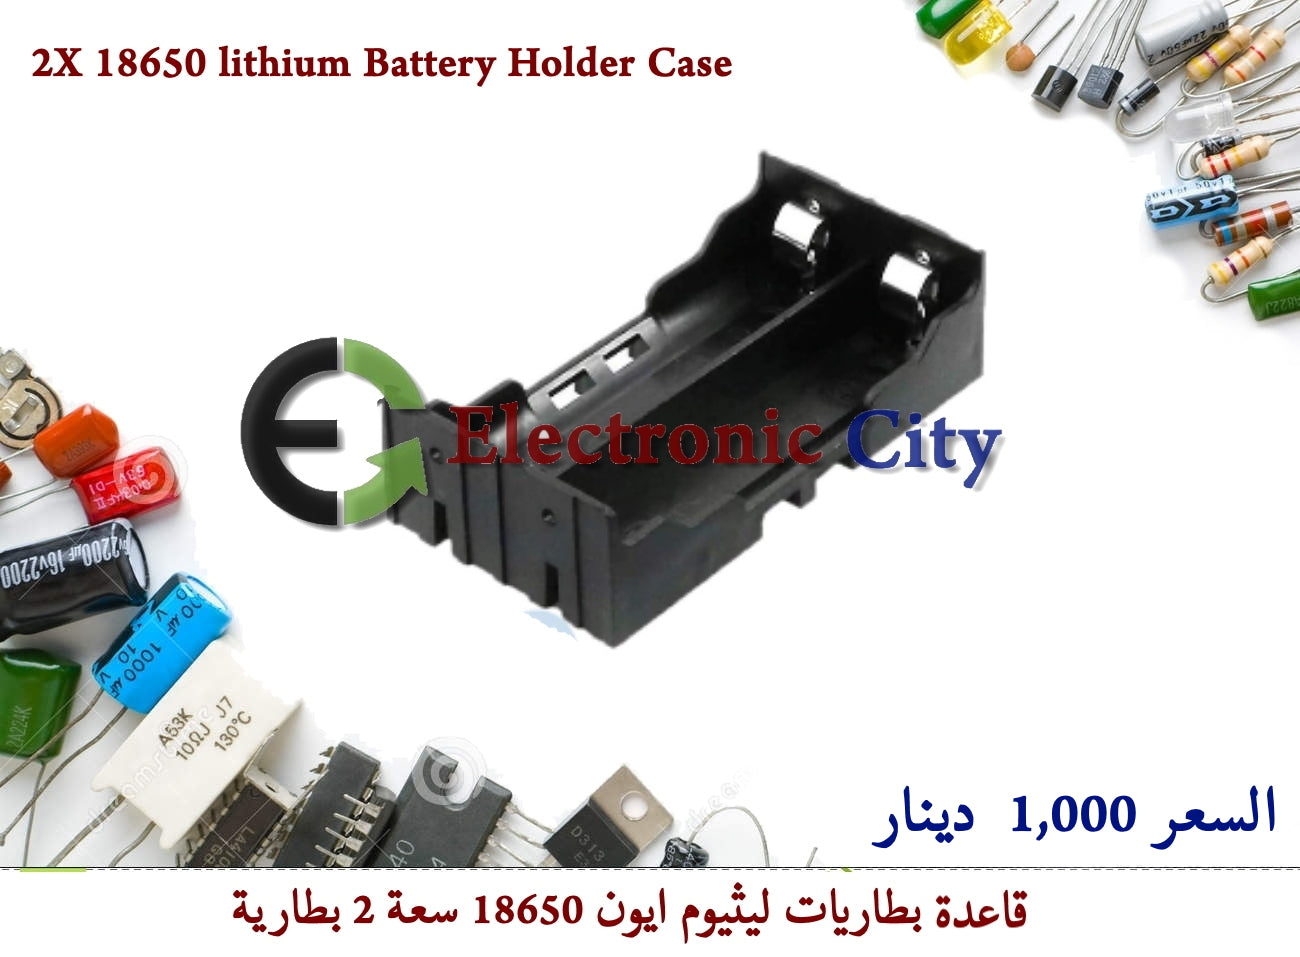 2X 18650 lithium Battery Holder Case #D6